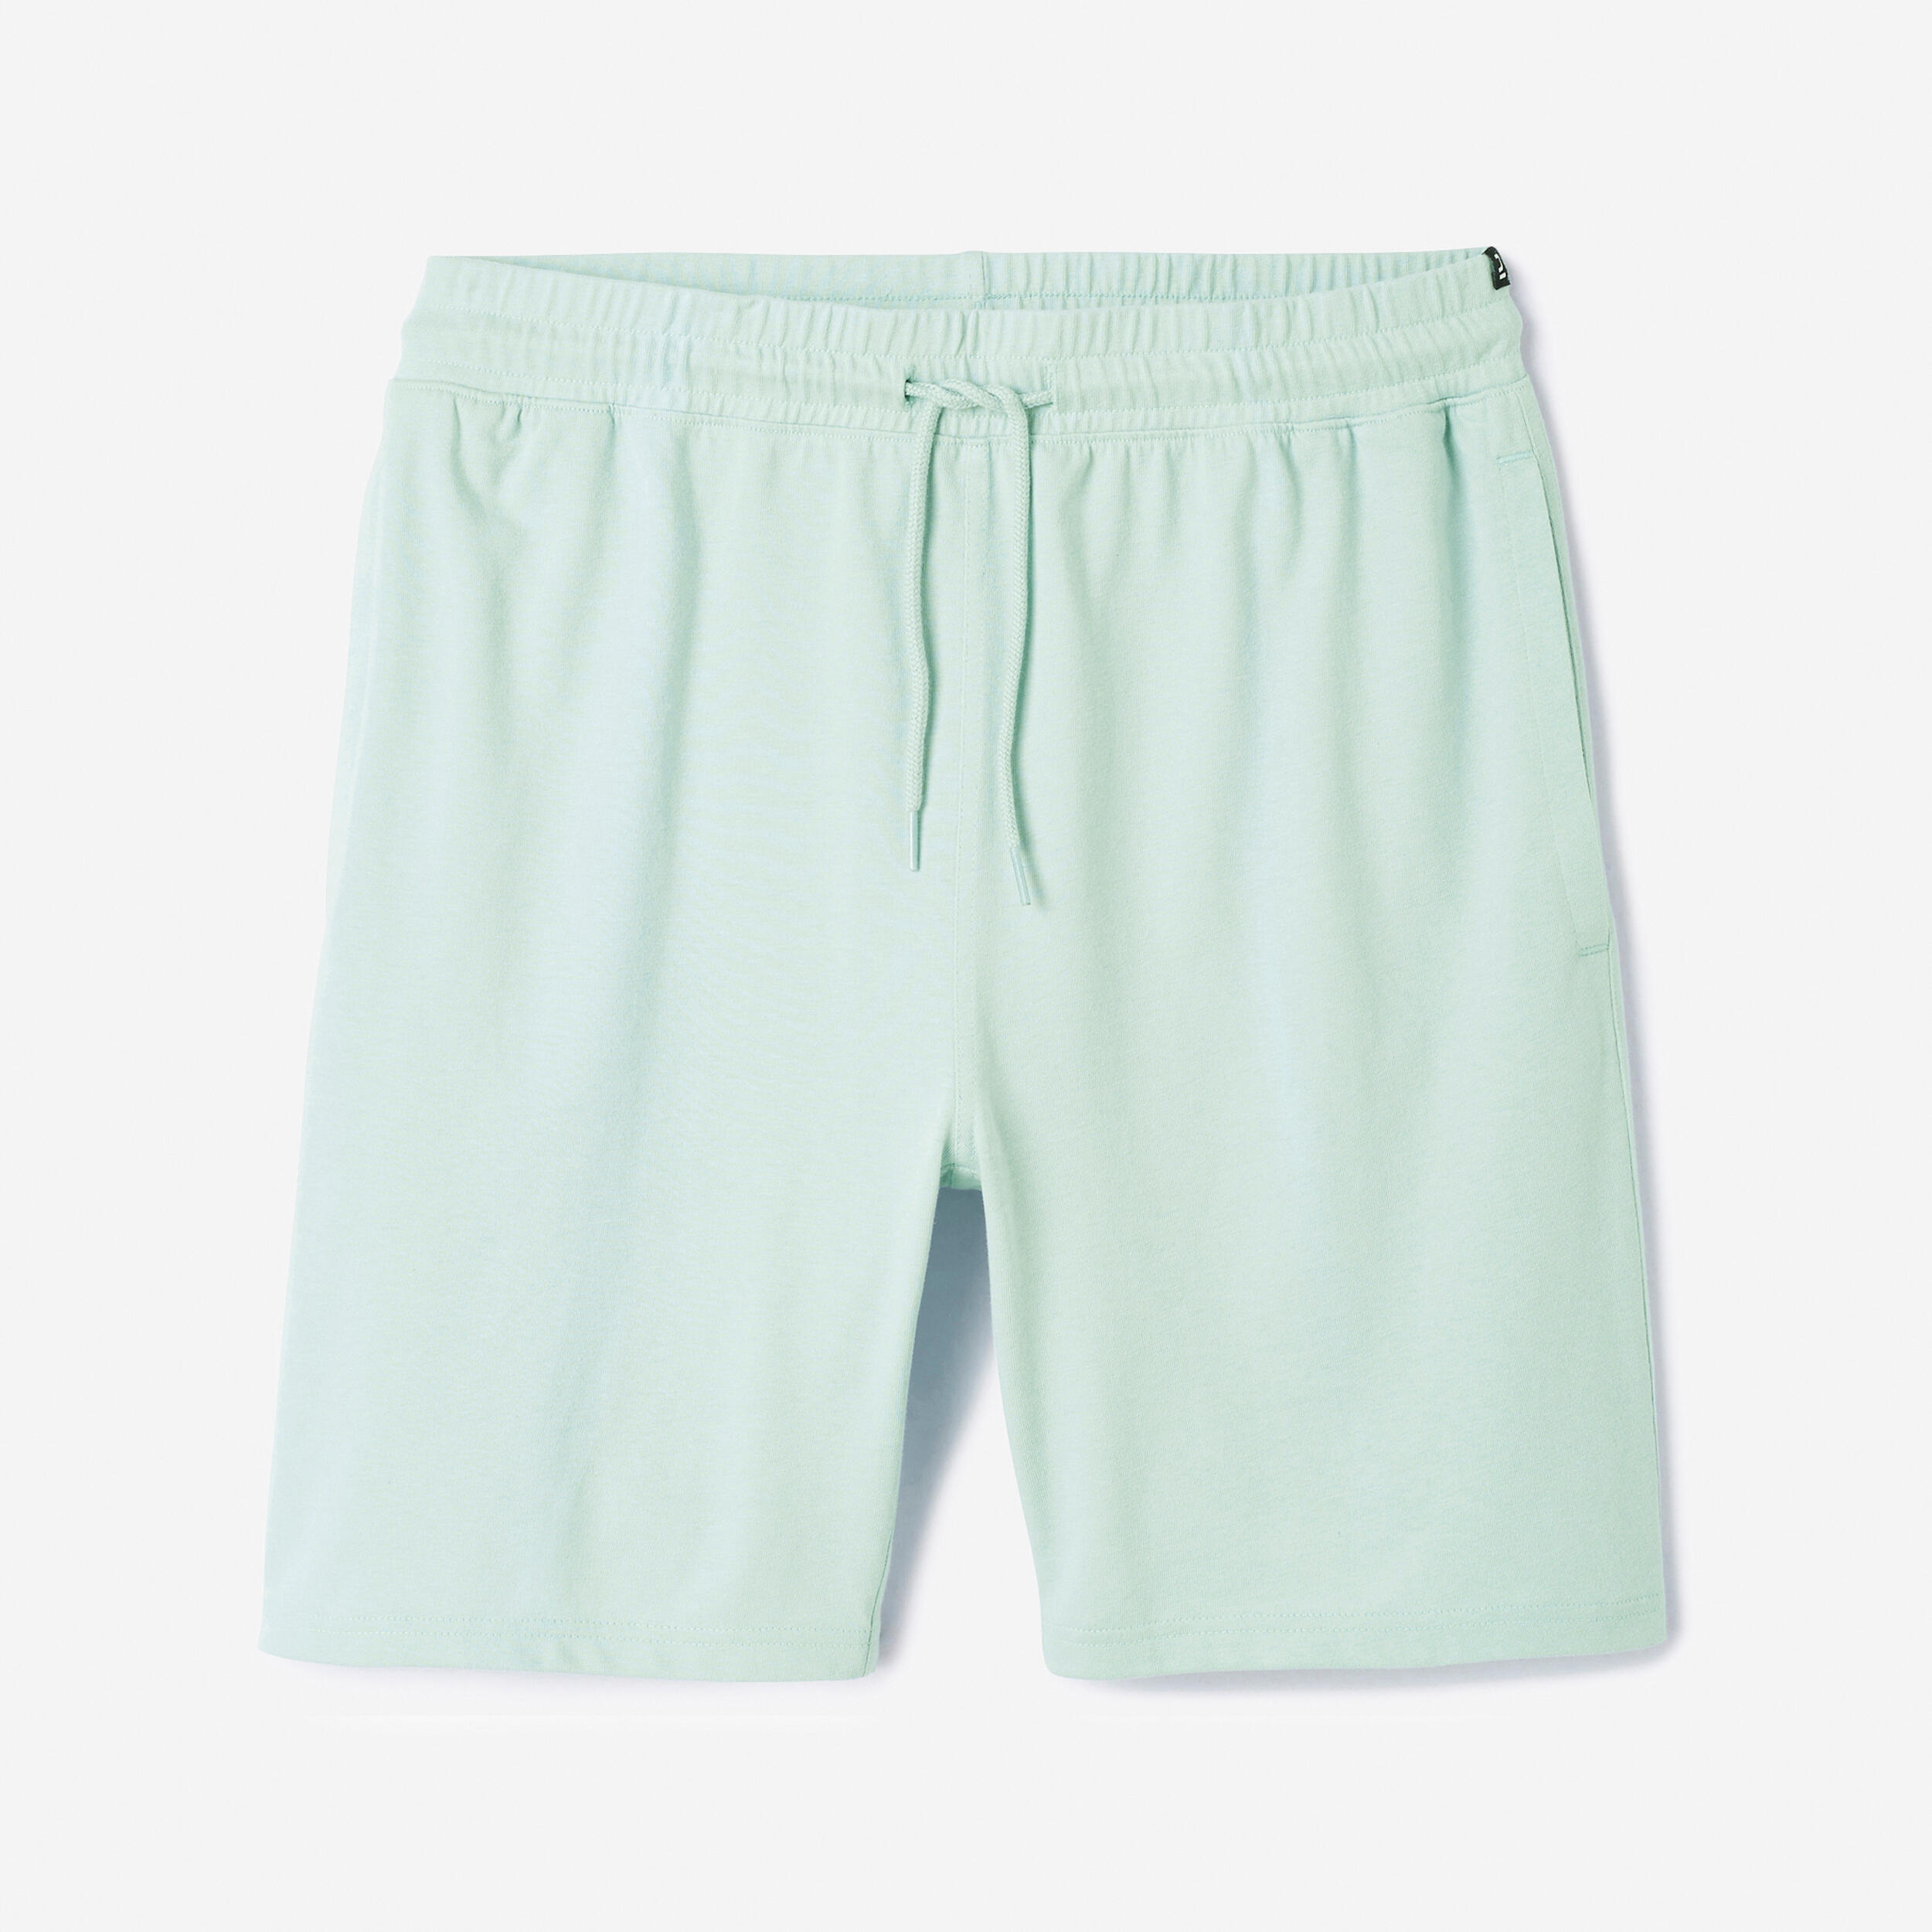 Men's Shorts For Gym Cotton Rich 500-Khaki